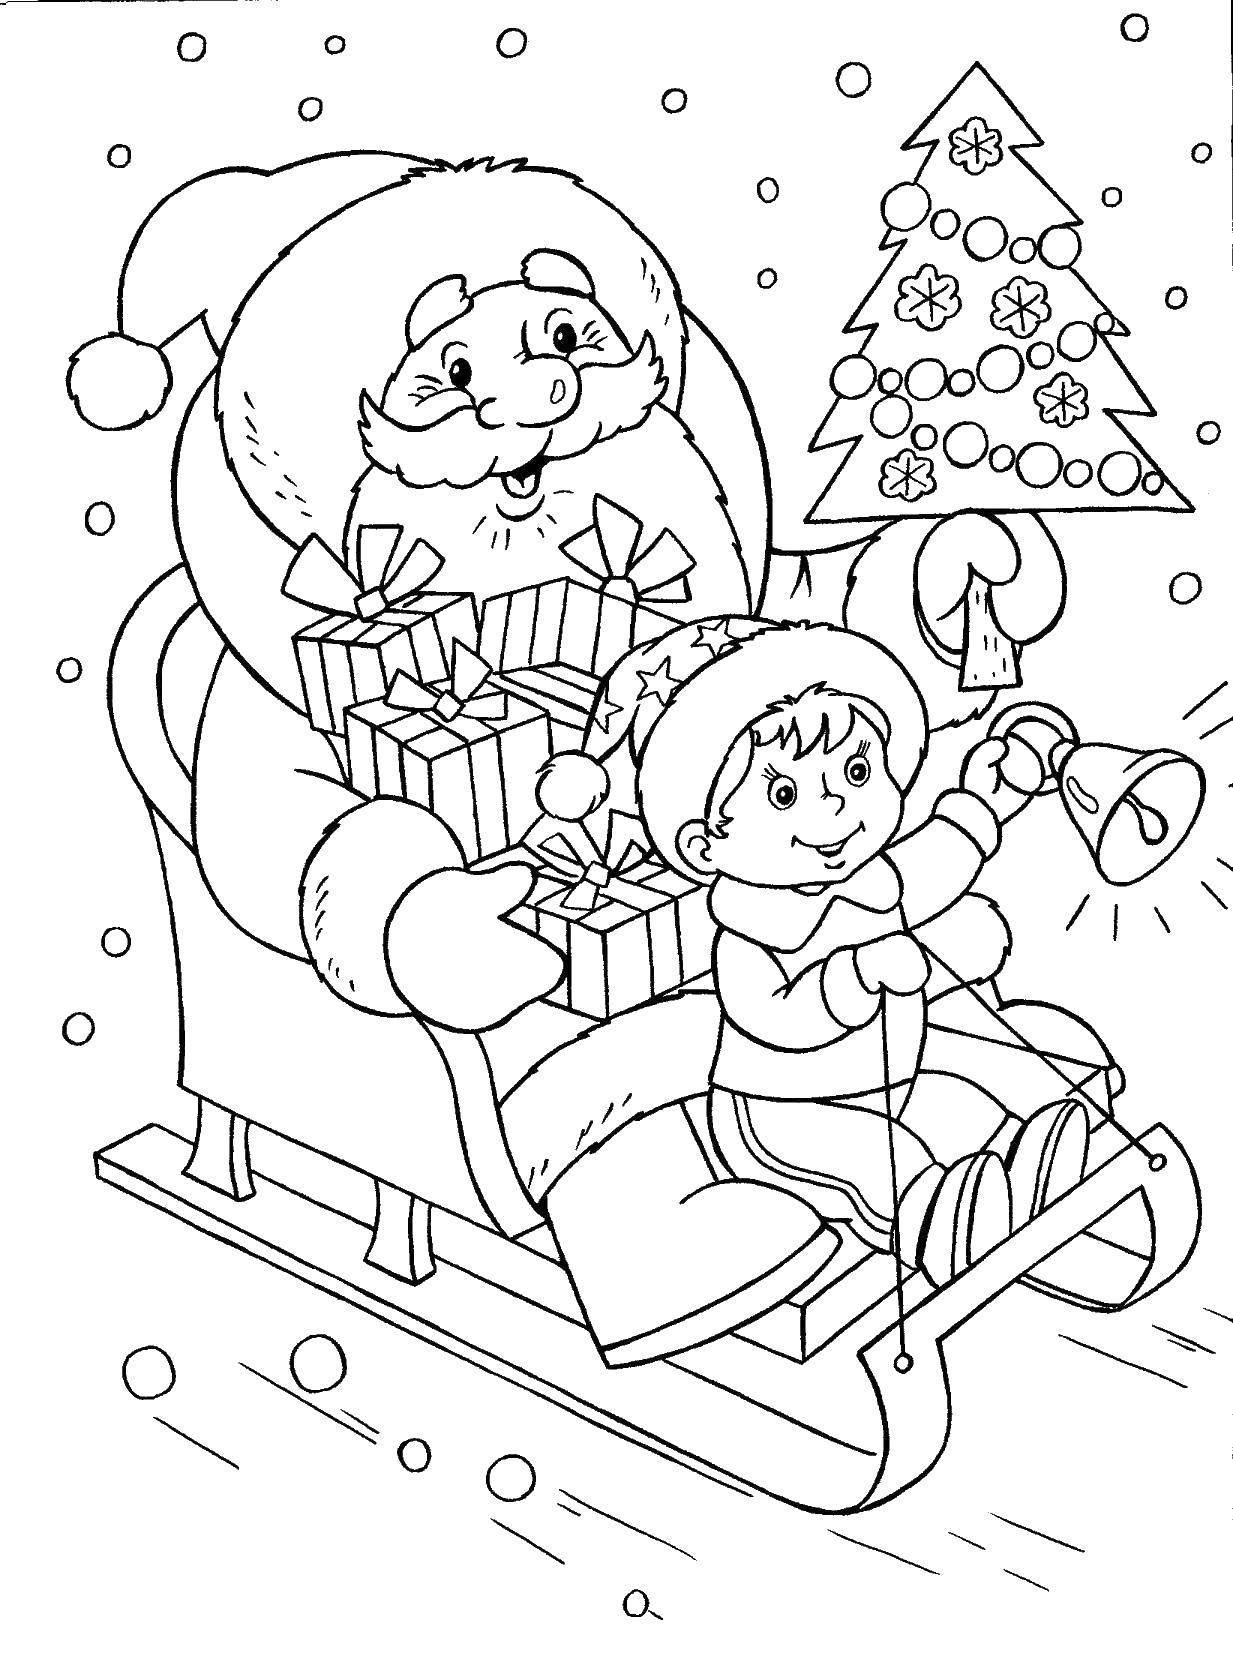 Название: Раскраска Дед мороз едет с подарками на санках. Категория: дед мороз. Теги: Дед мороз, подарки.